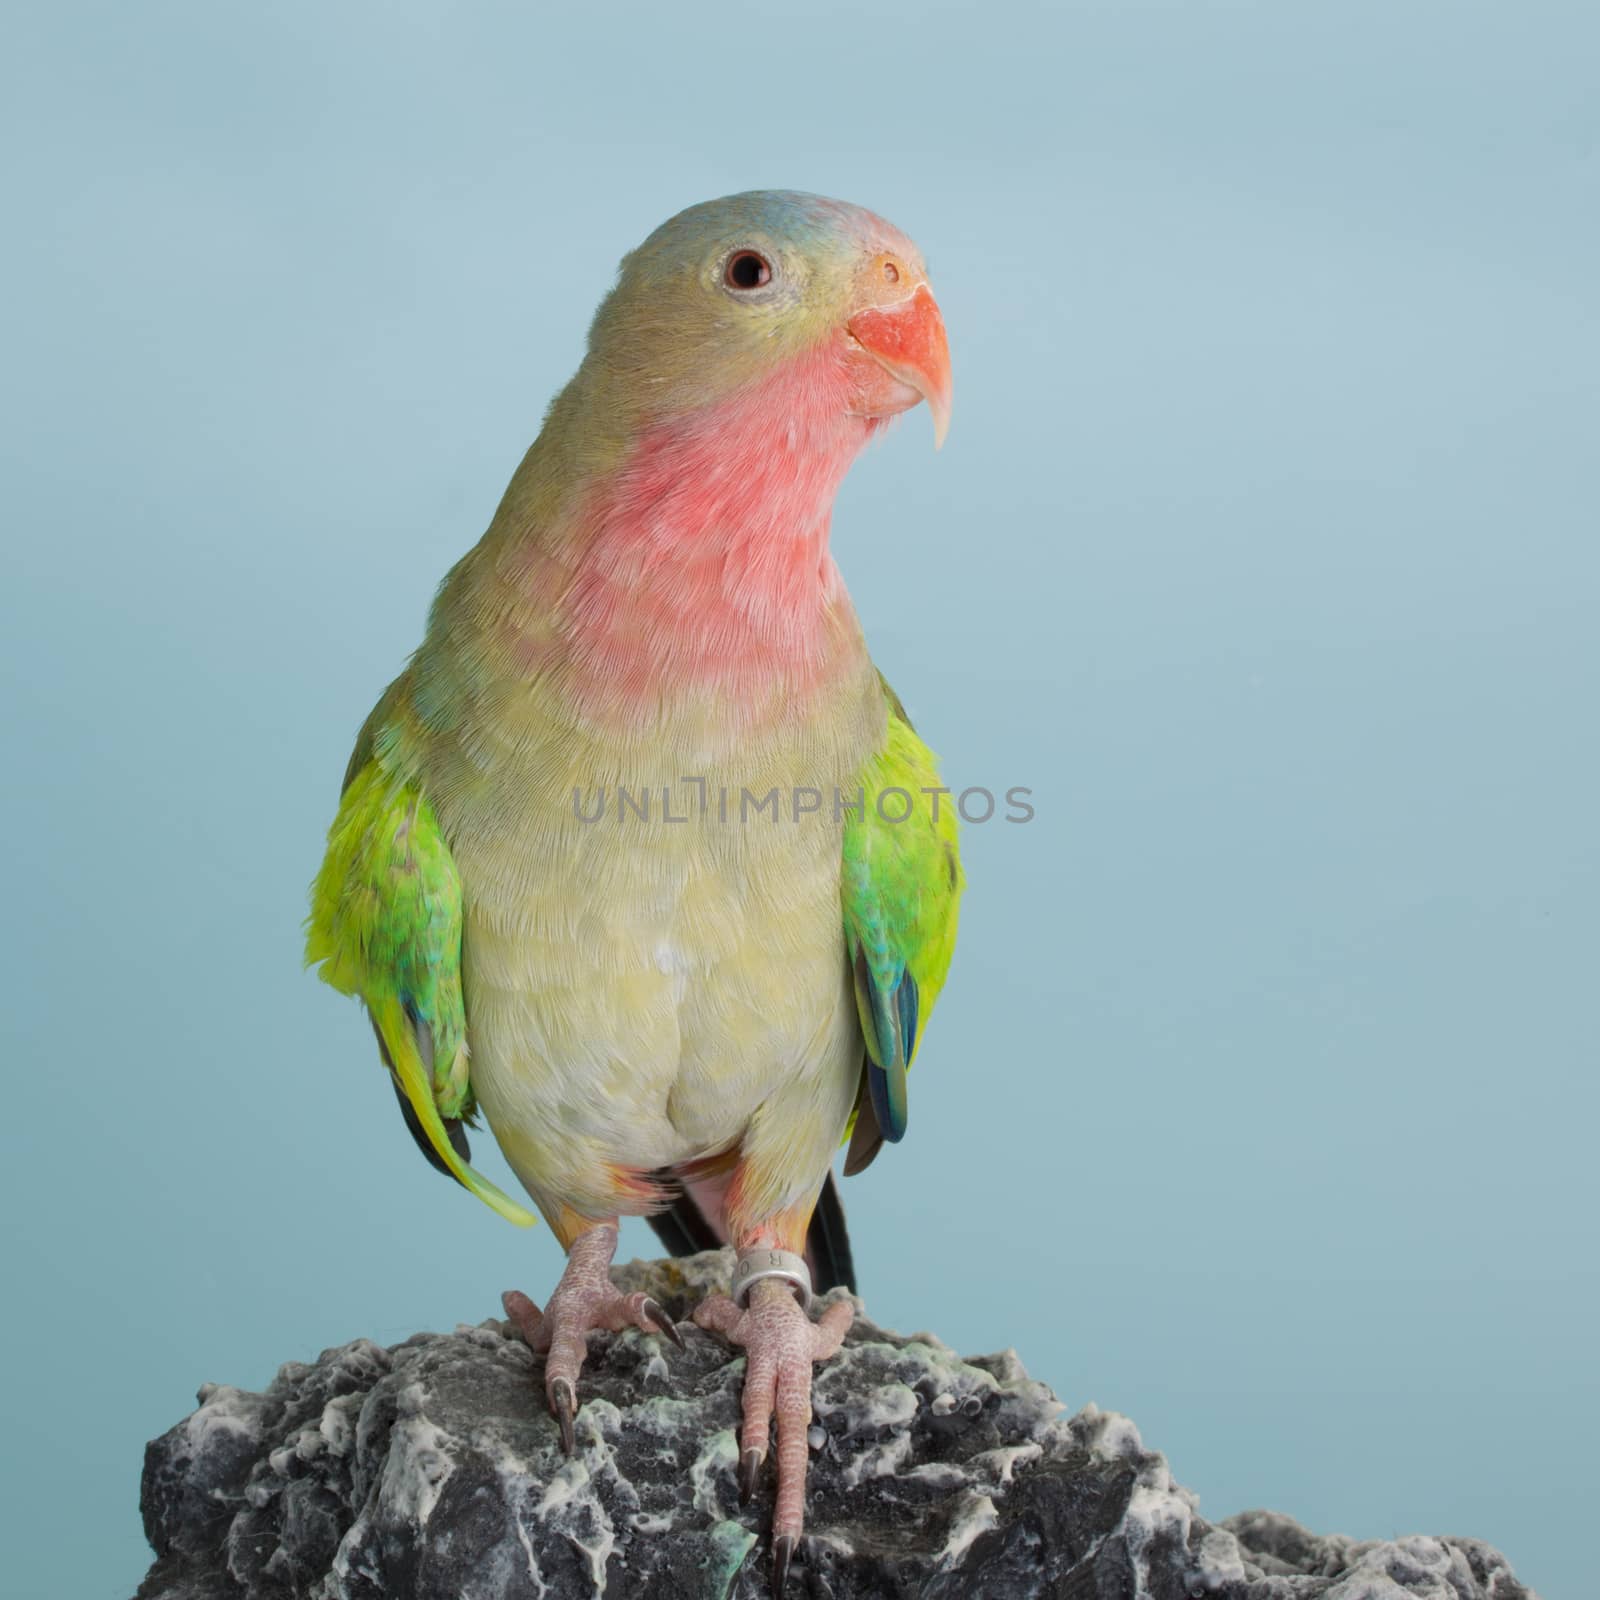 Portrait of a Princess parrot domestic bird 